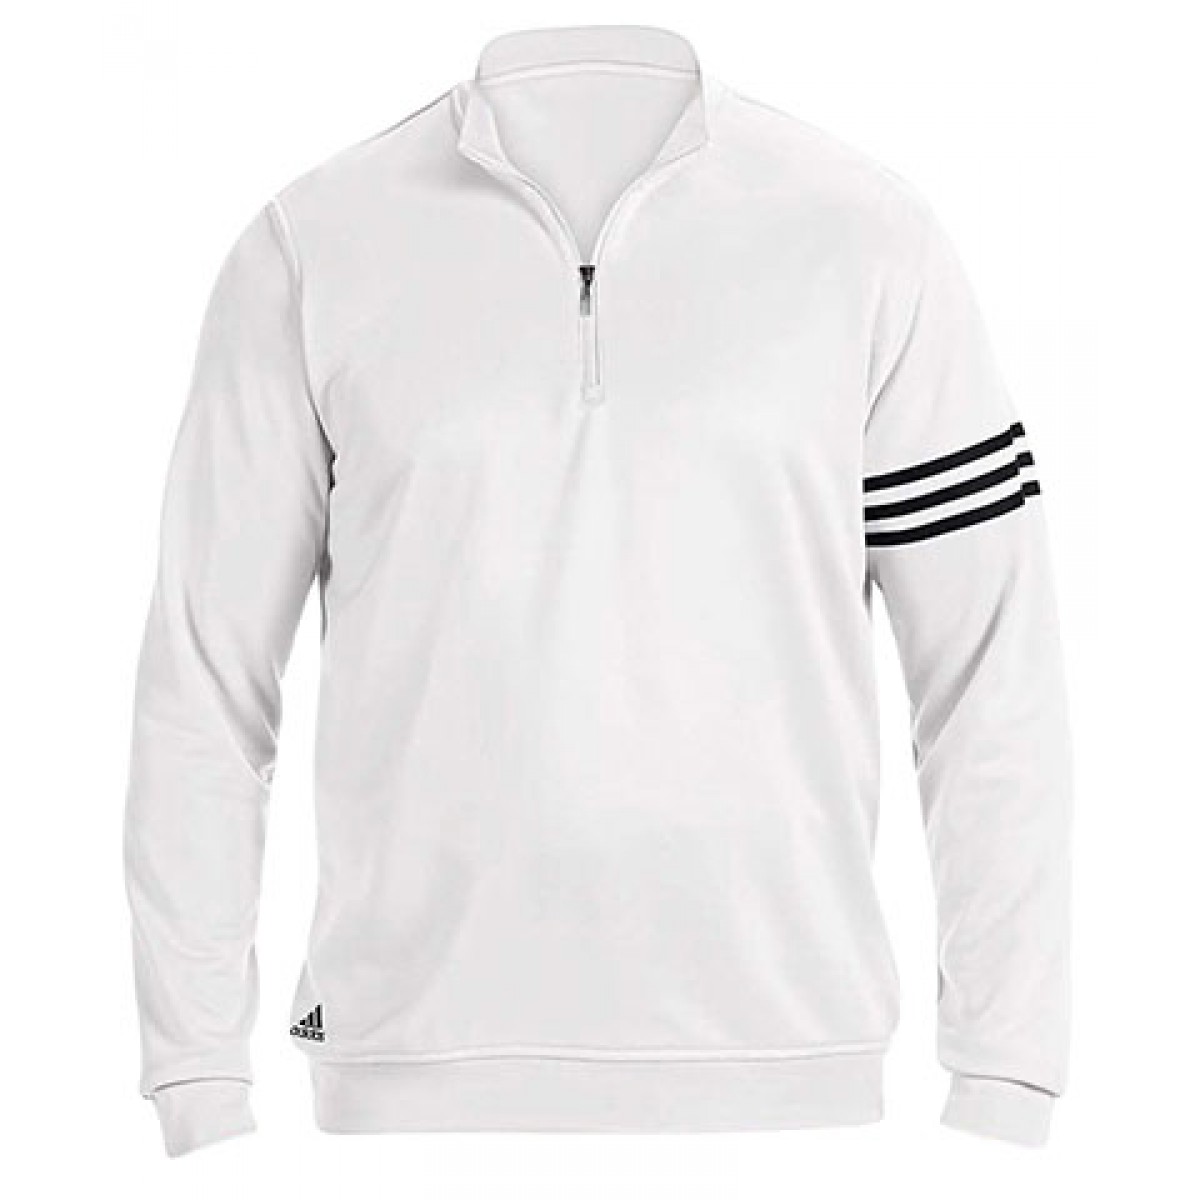 Adidas Men's 3-Stripes Pullover-White-L